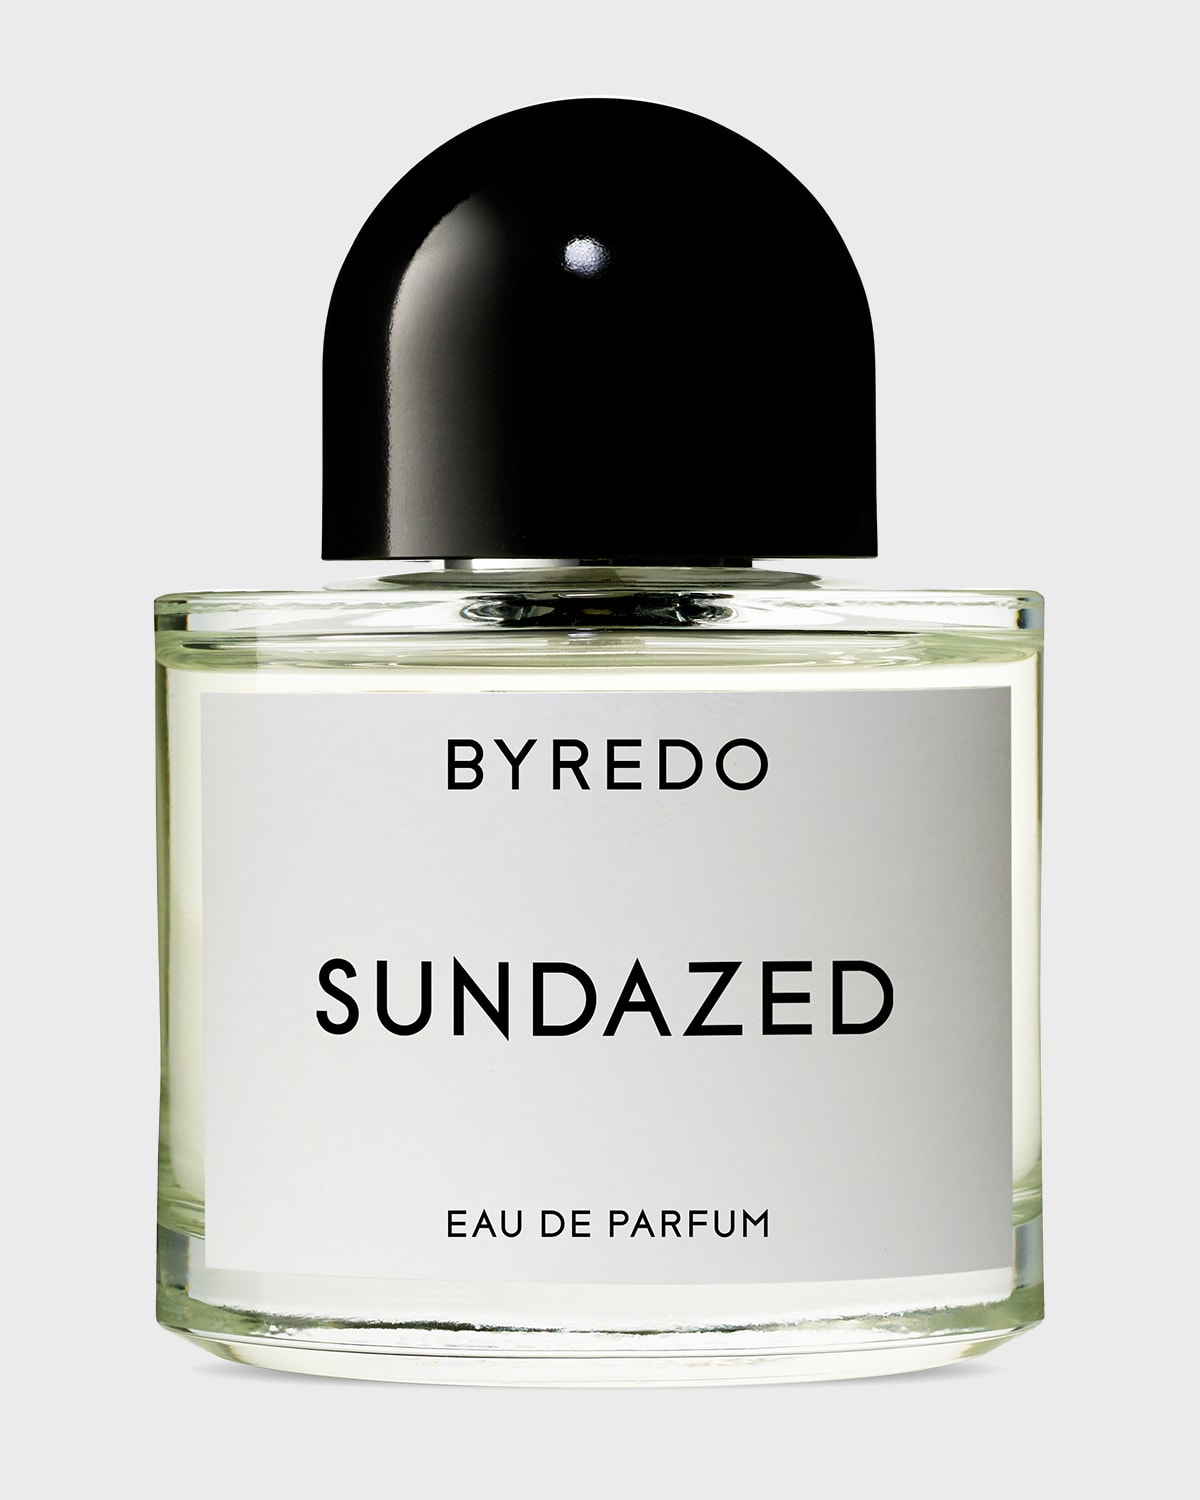 Sundazed Eau de Parfum, 1.7 oz.